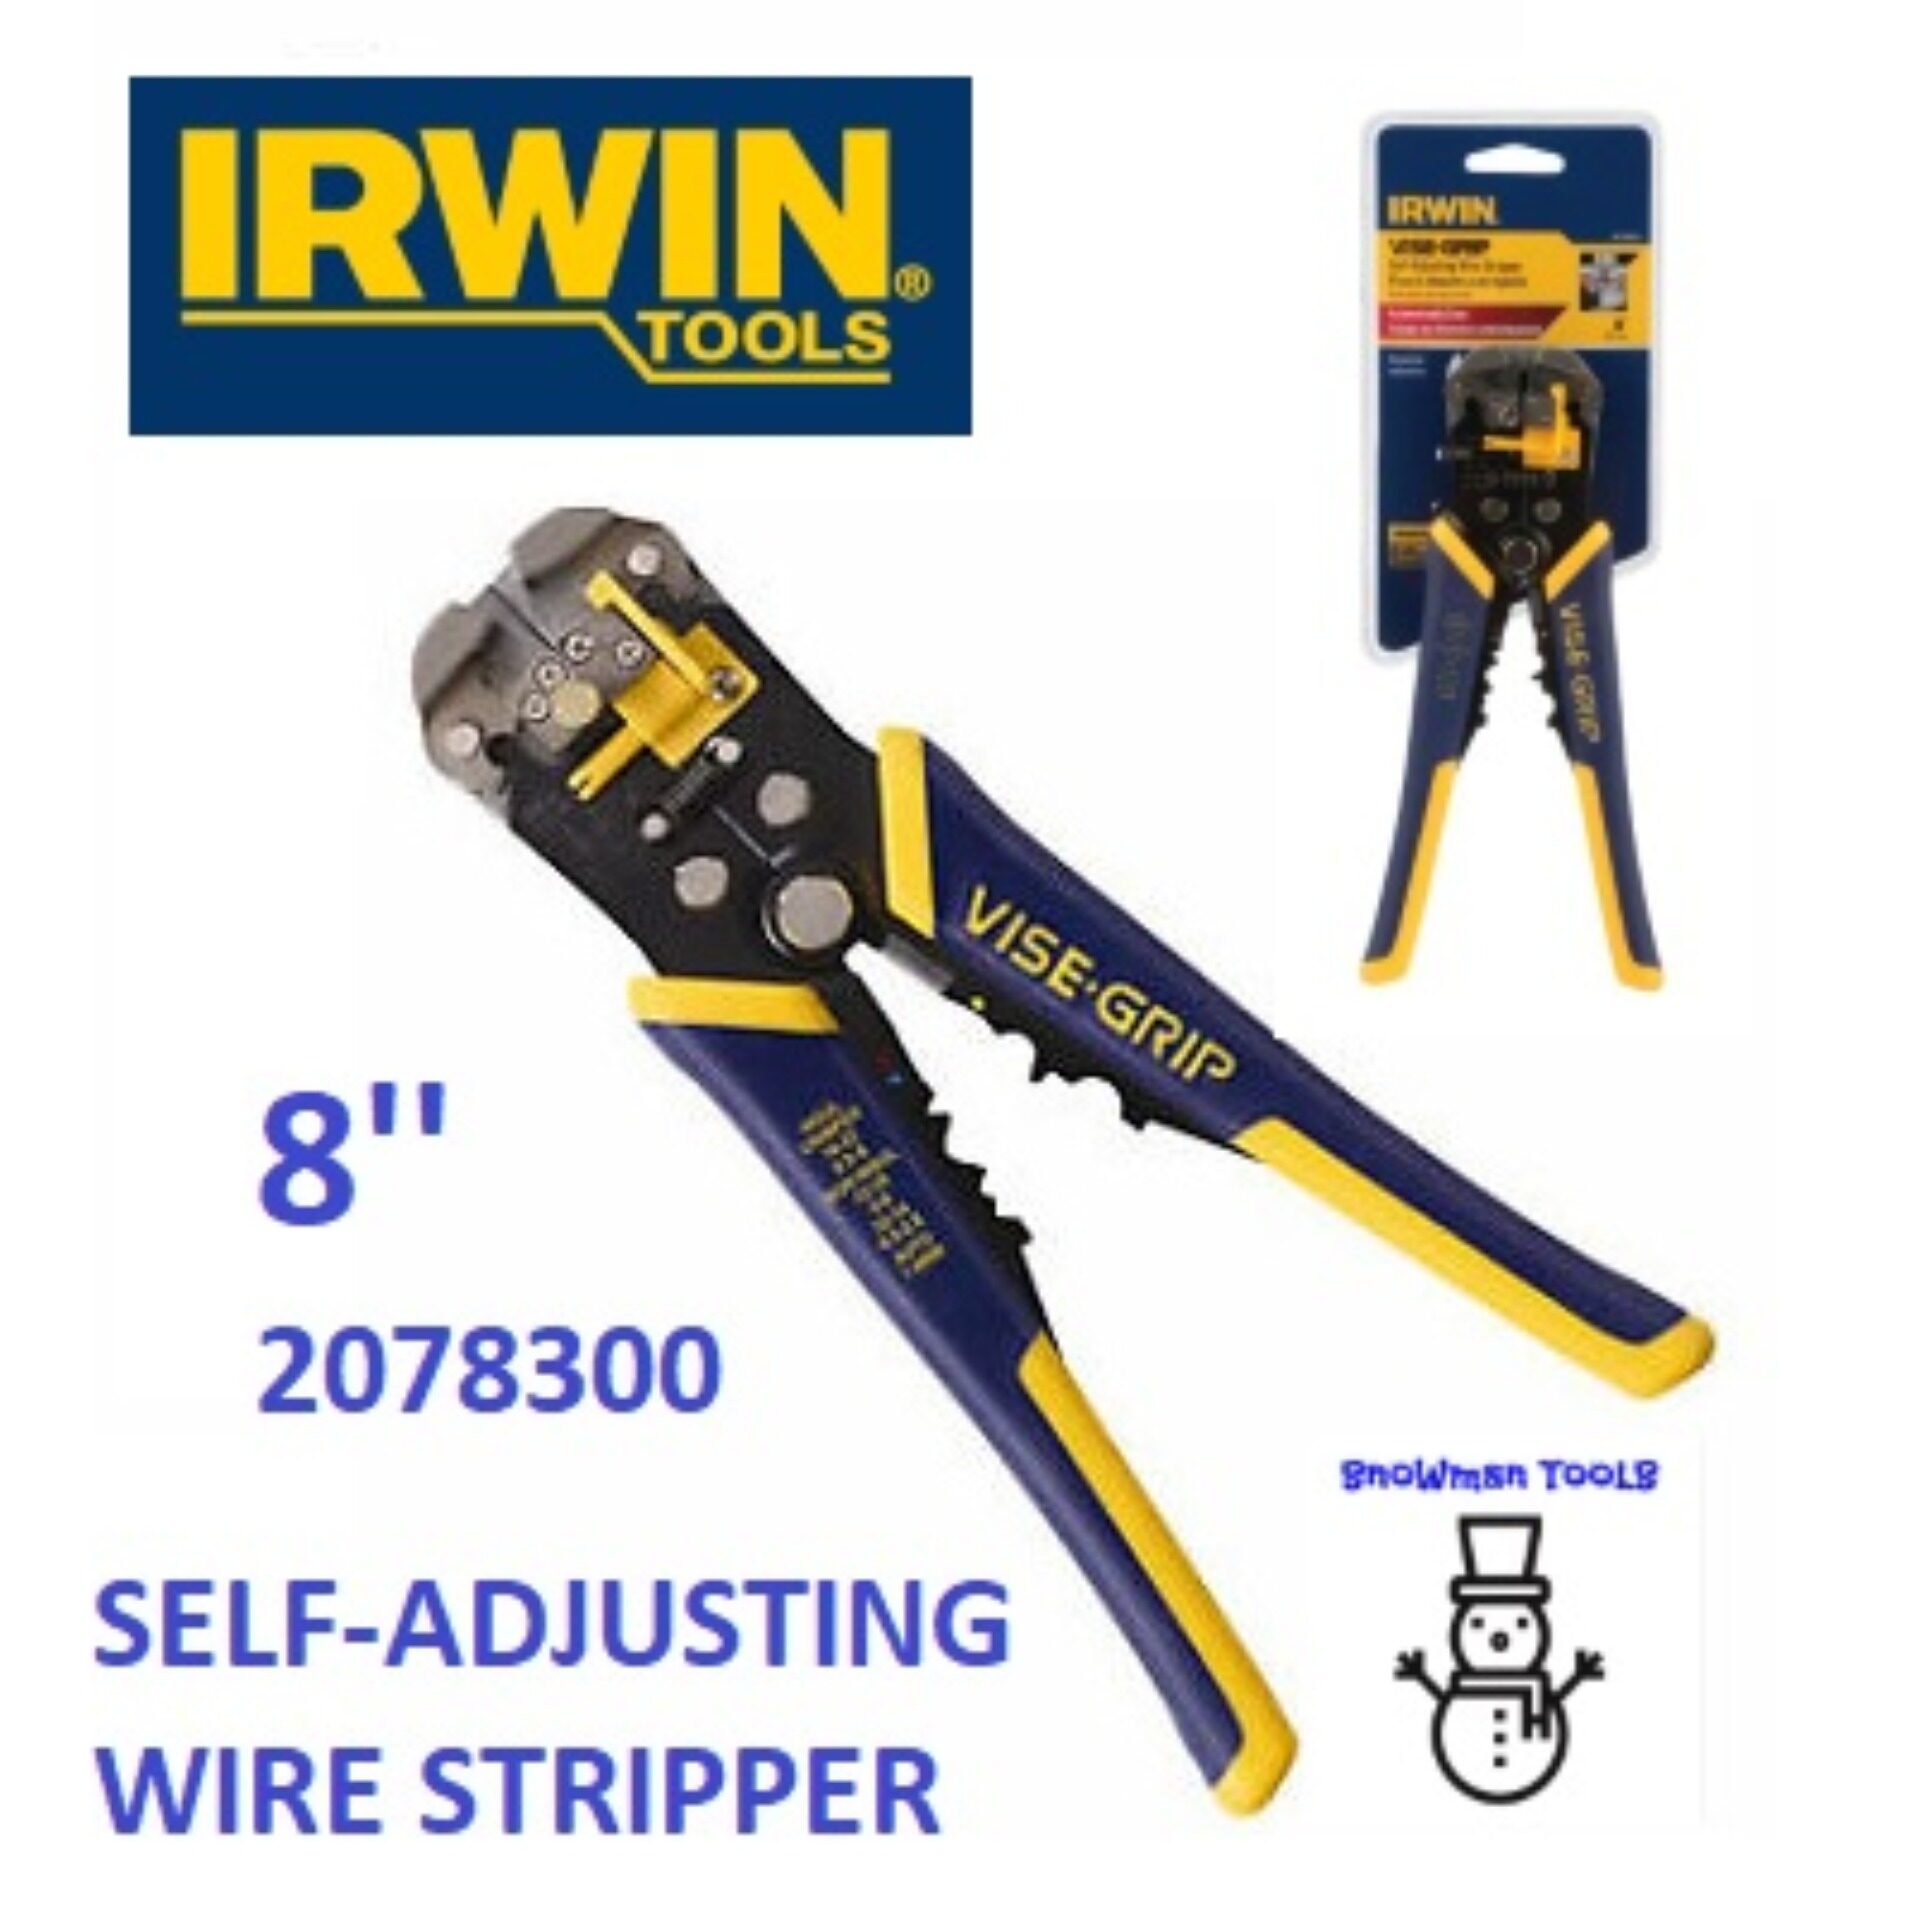 IRWIN Vise-Grip 8 inch Self-Adjusting Wire Stripper/Cutter for sale online 